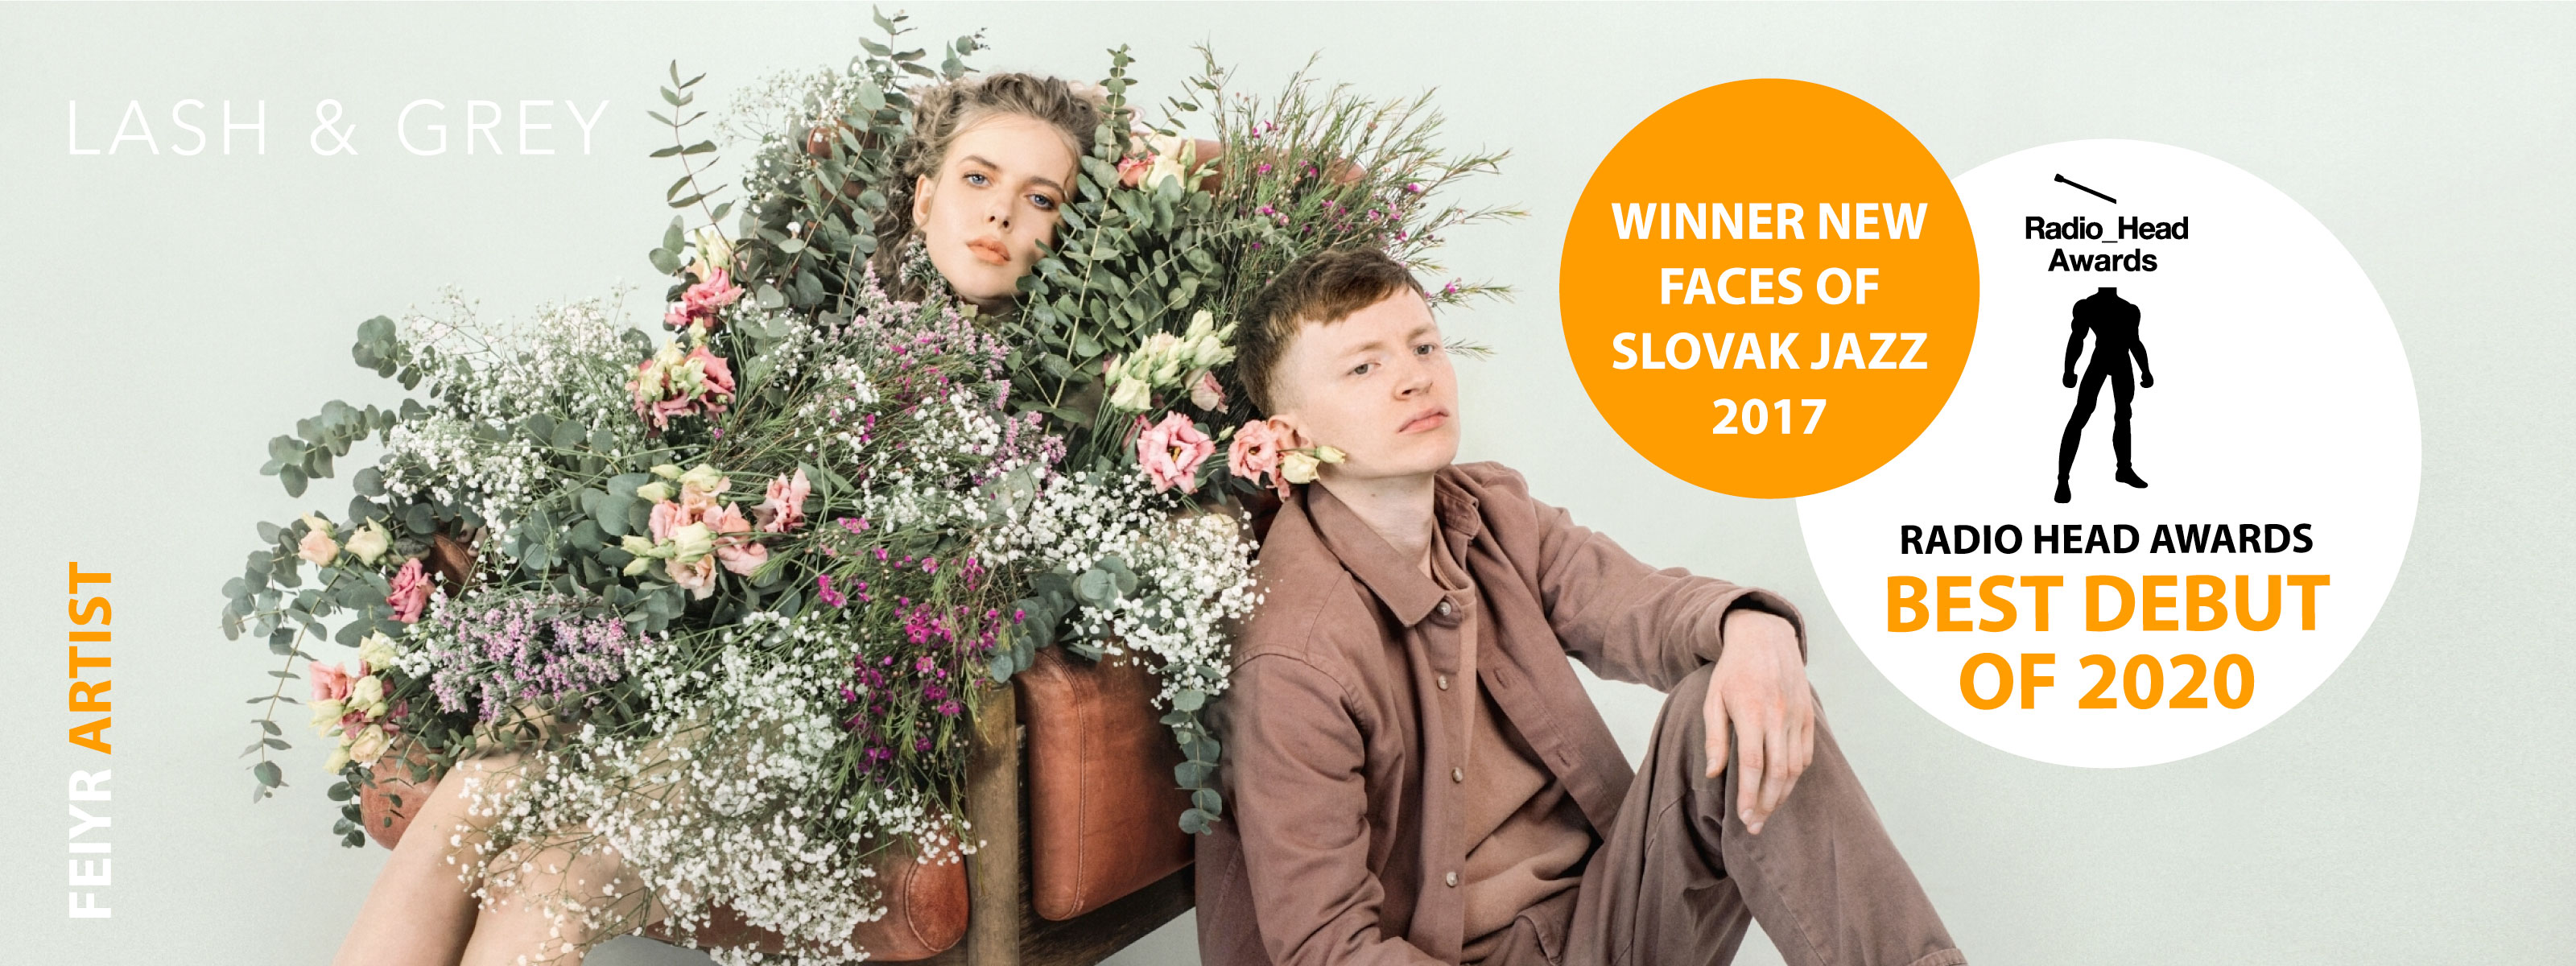 Best Debut of 2020' Radio Head Awards Winner New Faces of Slovak Jazz 2017